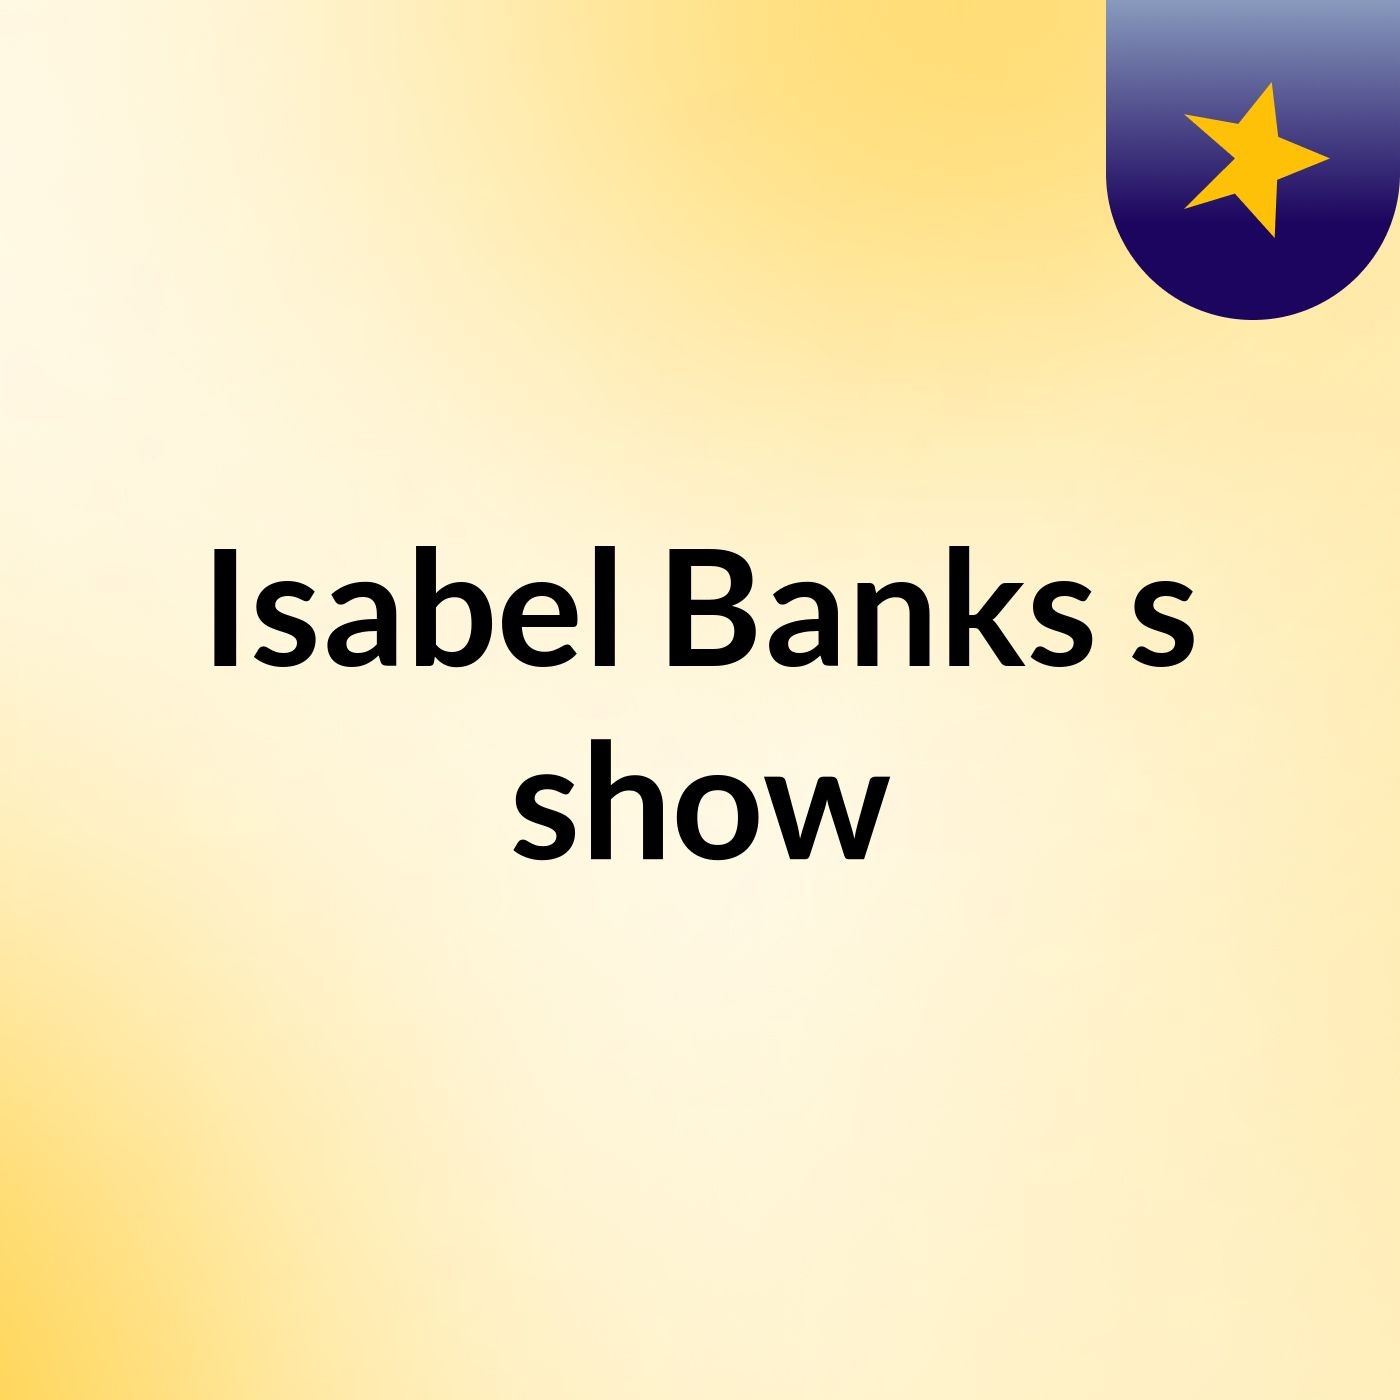 Isabel Banks's show